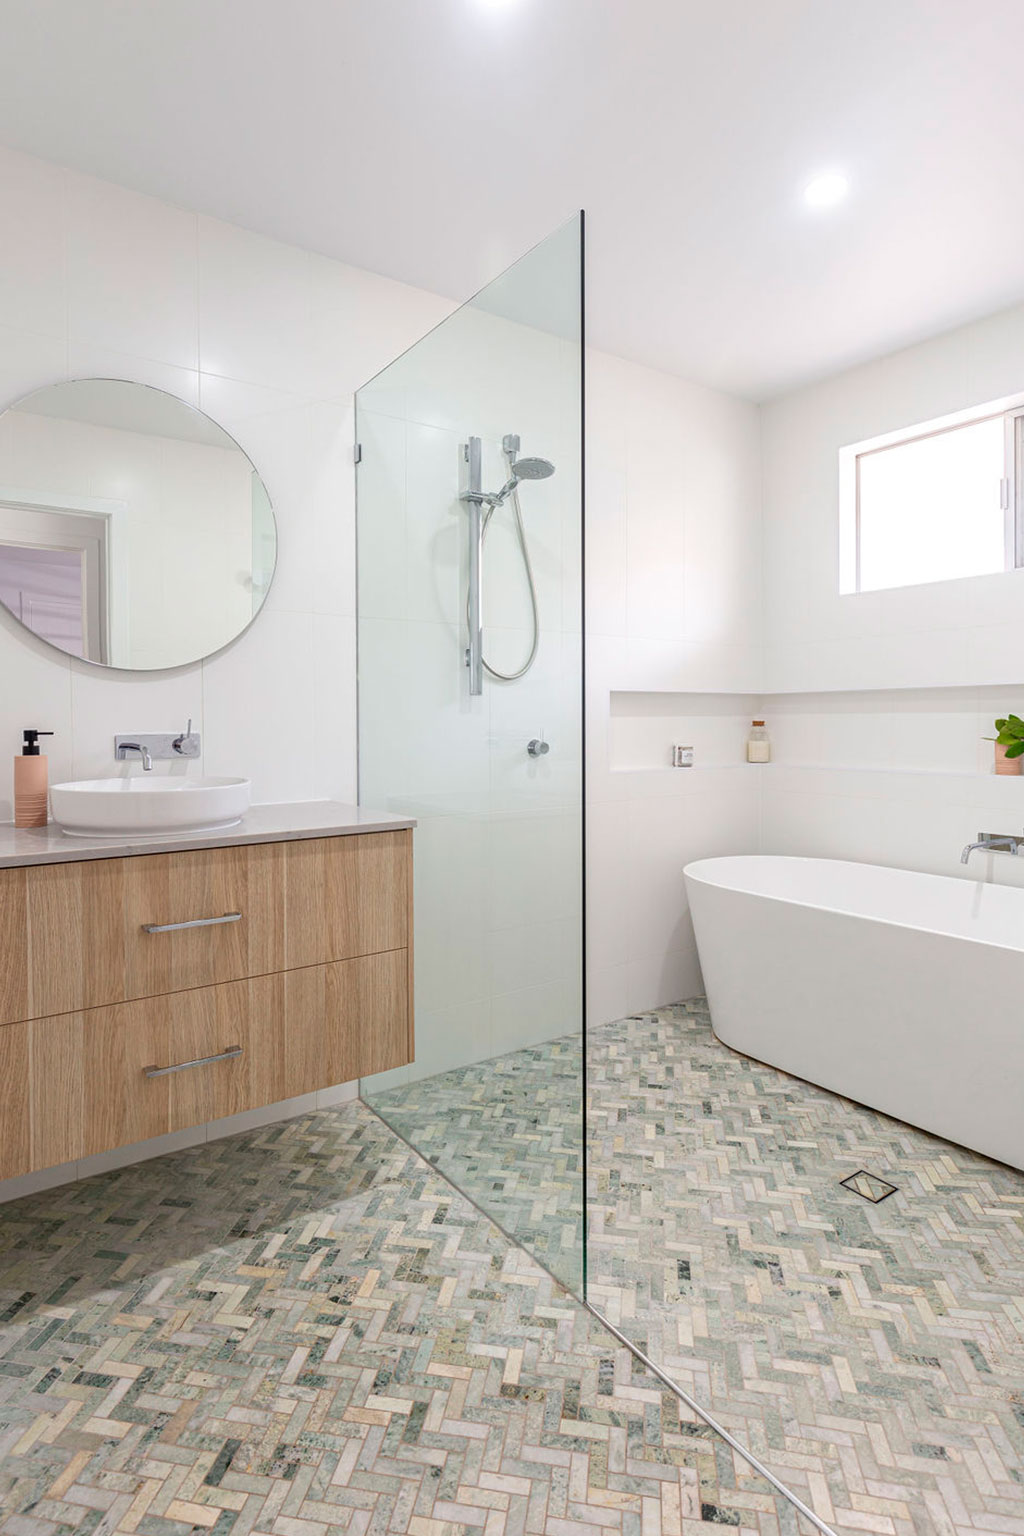 bathroom renovations - herringbone tiles - floating stone vanity - inset bathroom shelving - bathtub installation